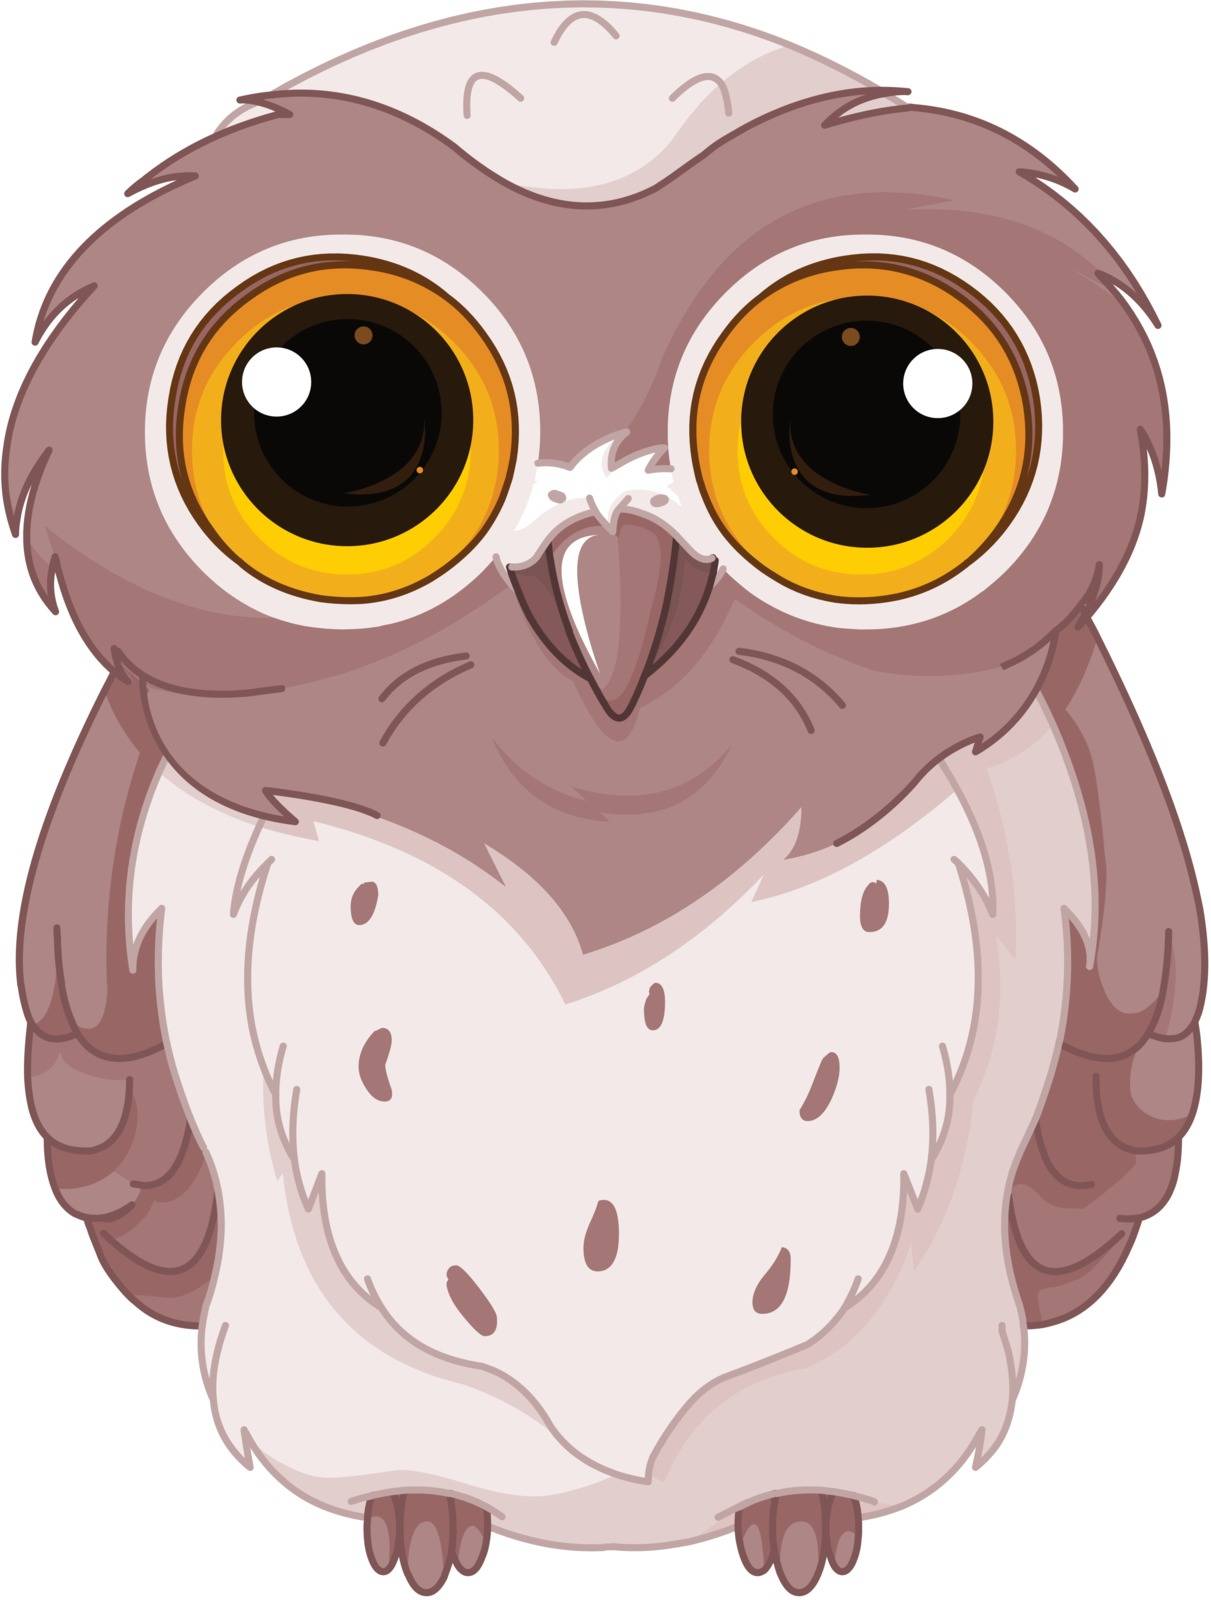 Cute owlet by Dazdraperma